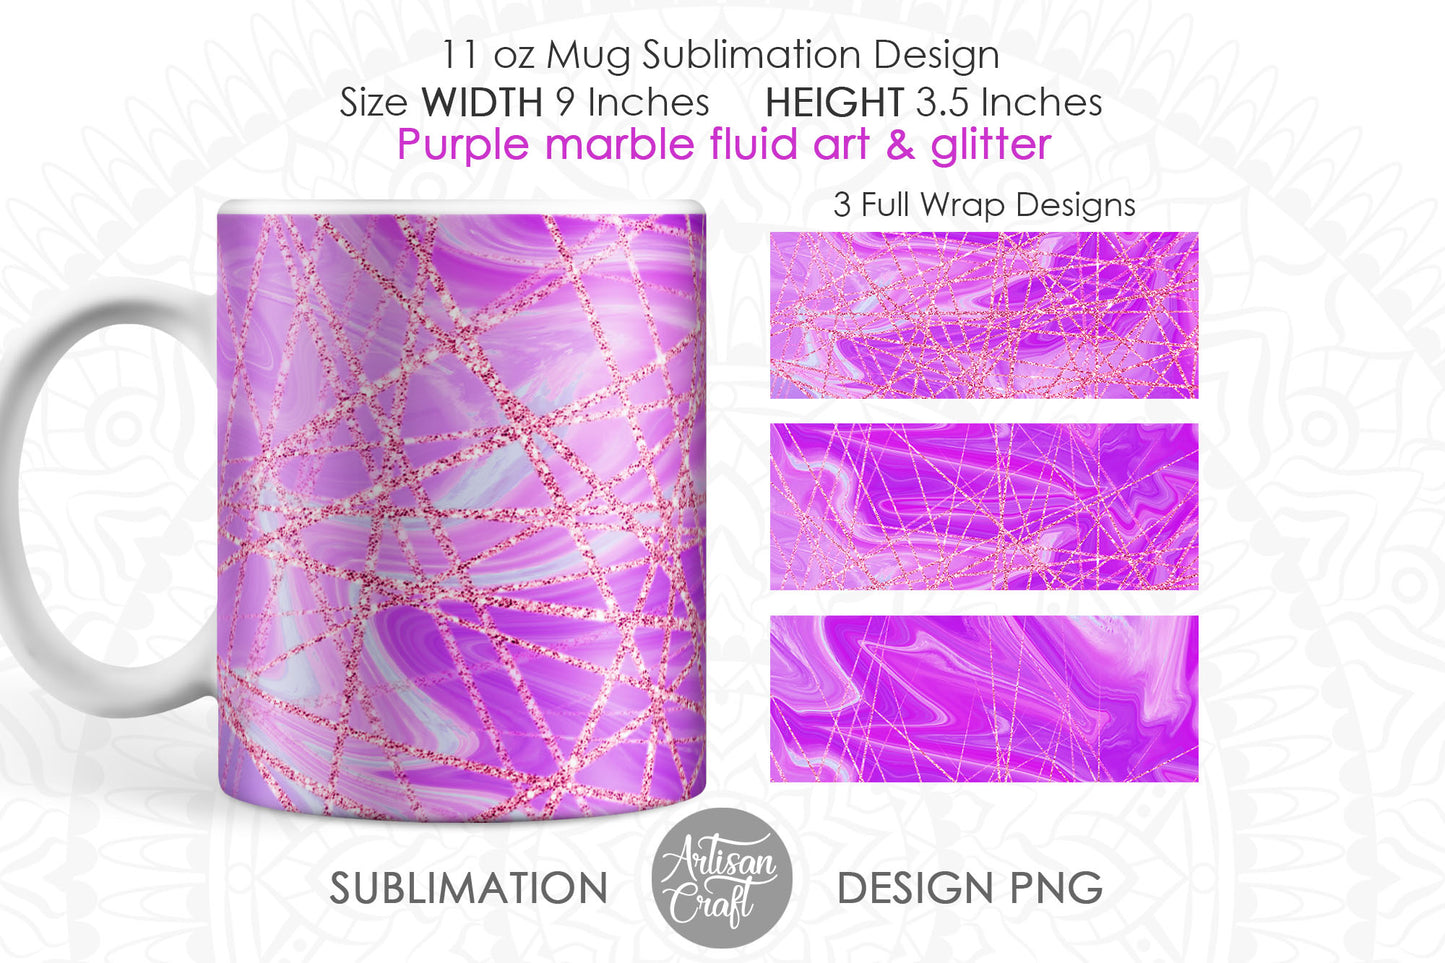 Mug sublimation design with pupal fluid art